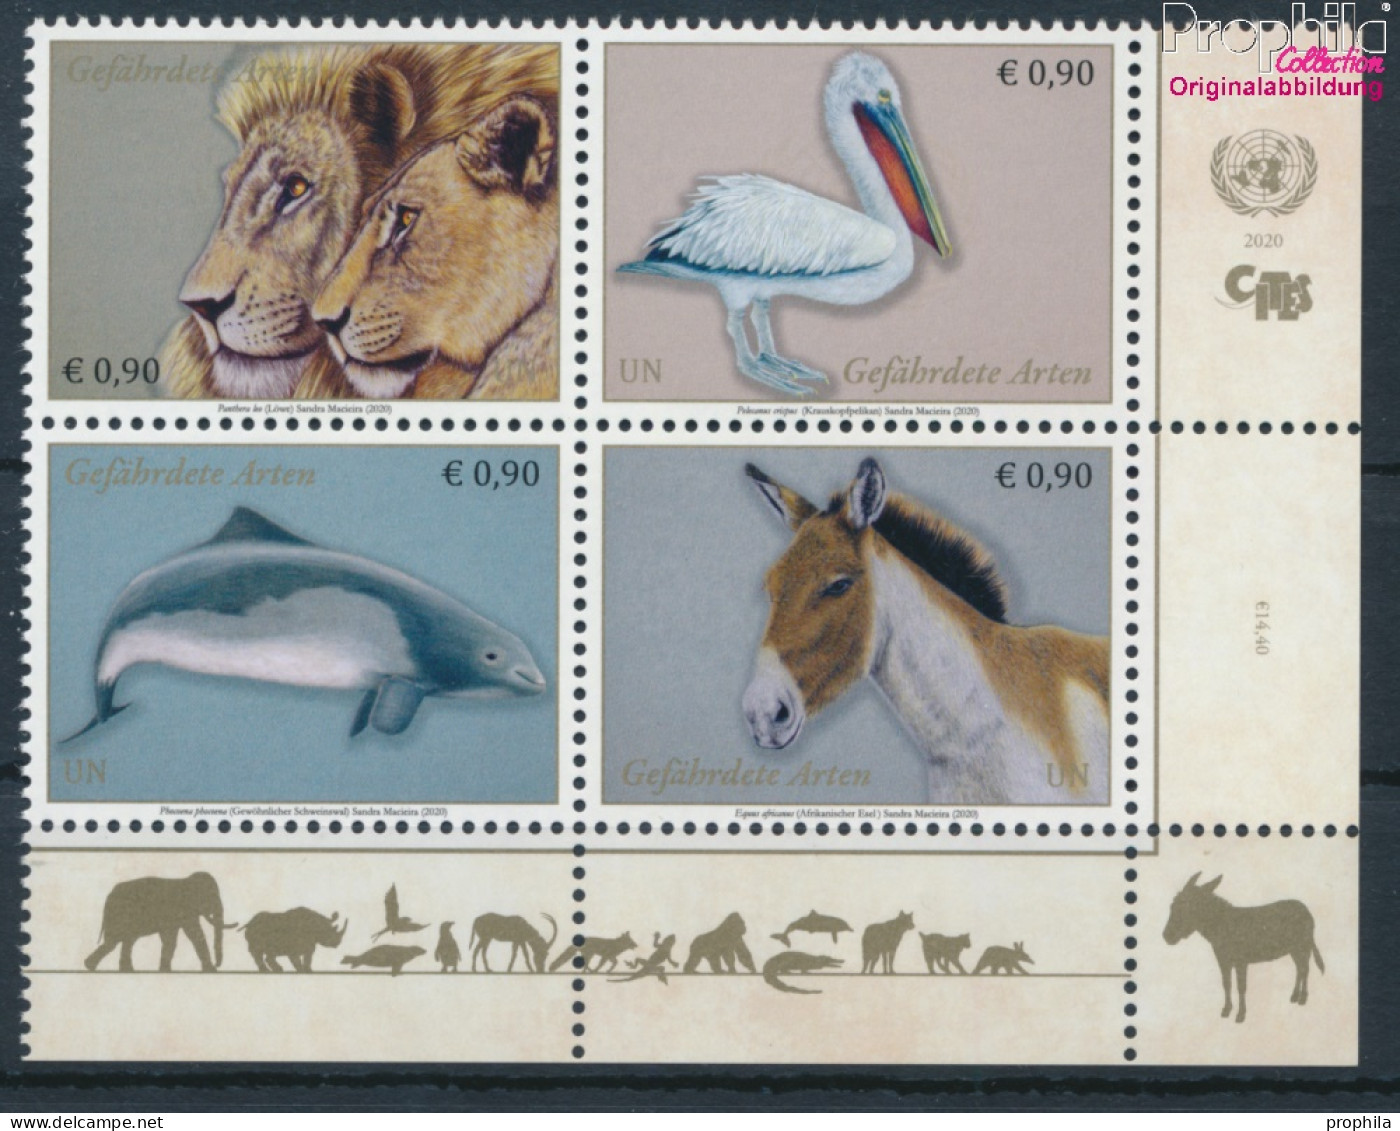 UNO - Wien 1078-1081 Viererblock (kompl.Ausg.) Postfrisch 2020 Gefährdete Arten (10193931 - Ongebruikt